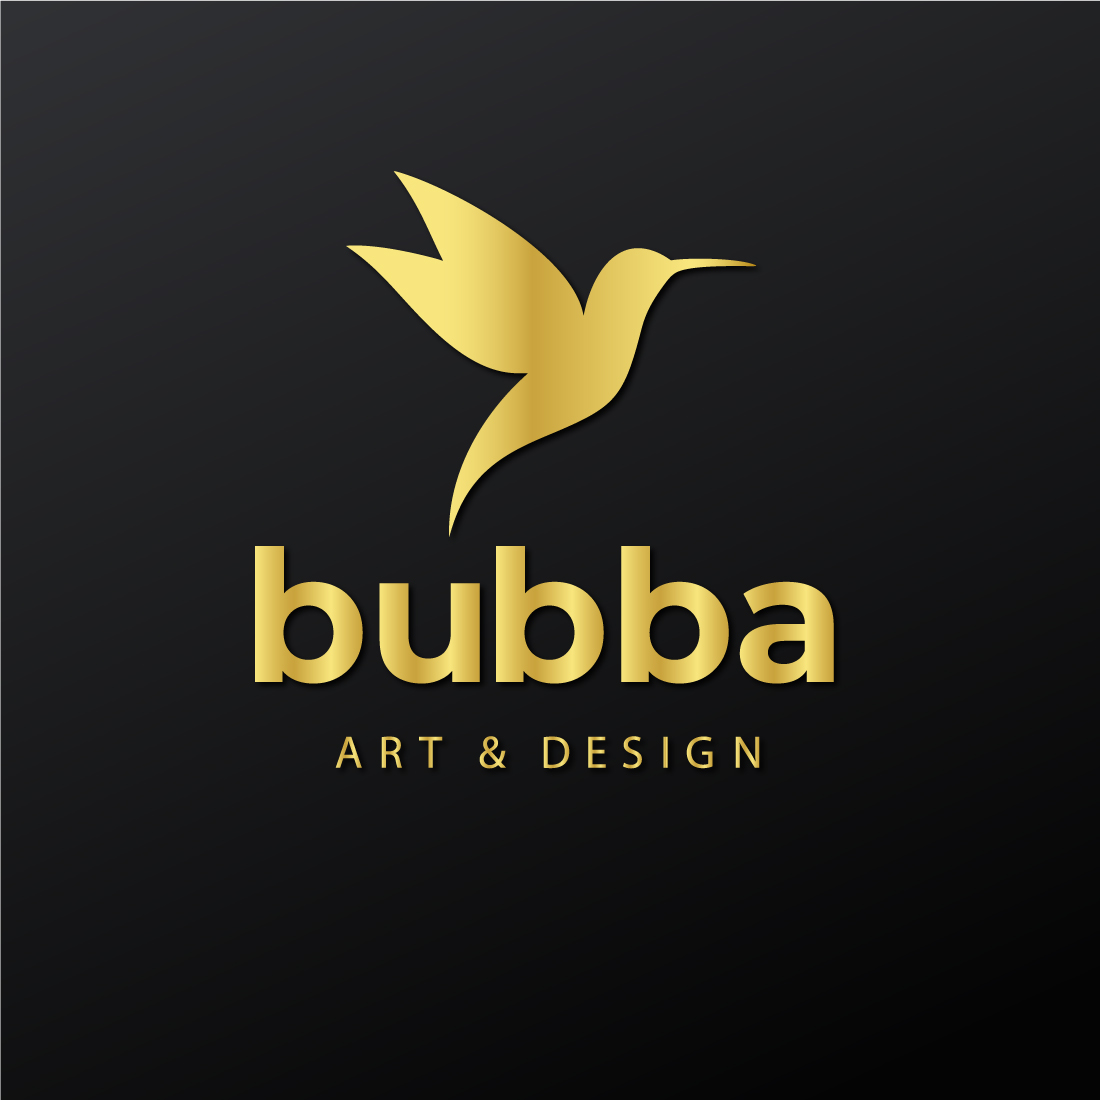 bird art design company logo 83